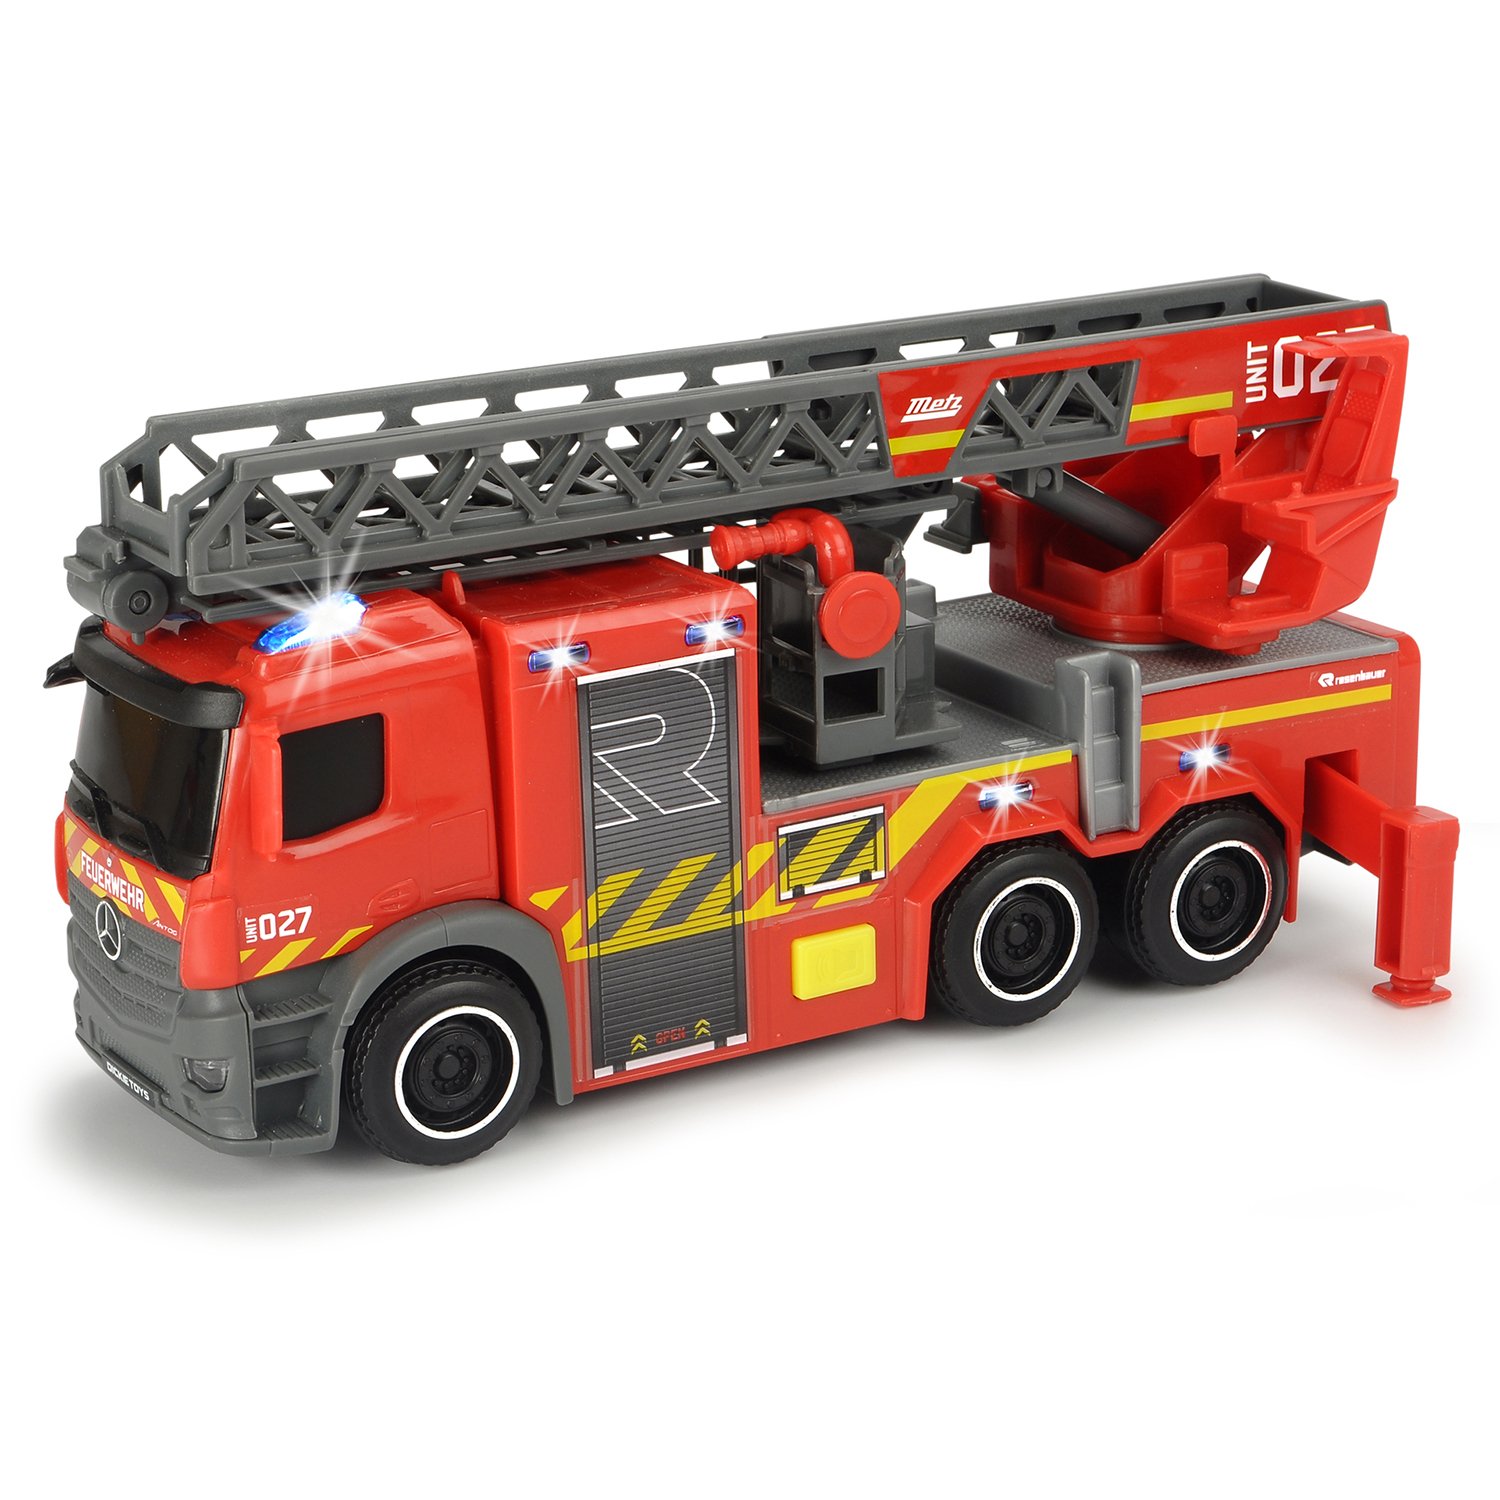 Пожарная машина Mercedes, 23 см, свет и звук Dickie Toys